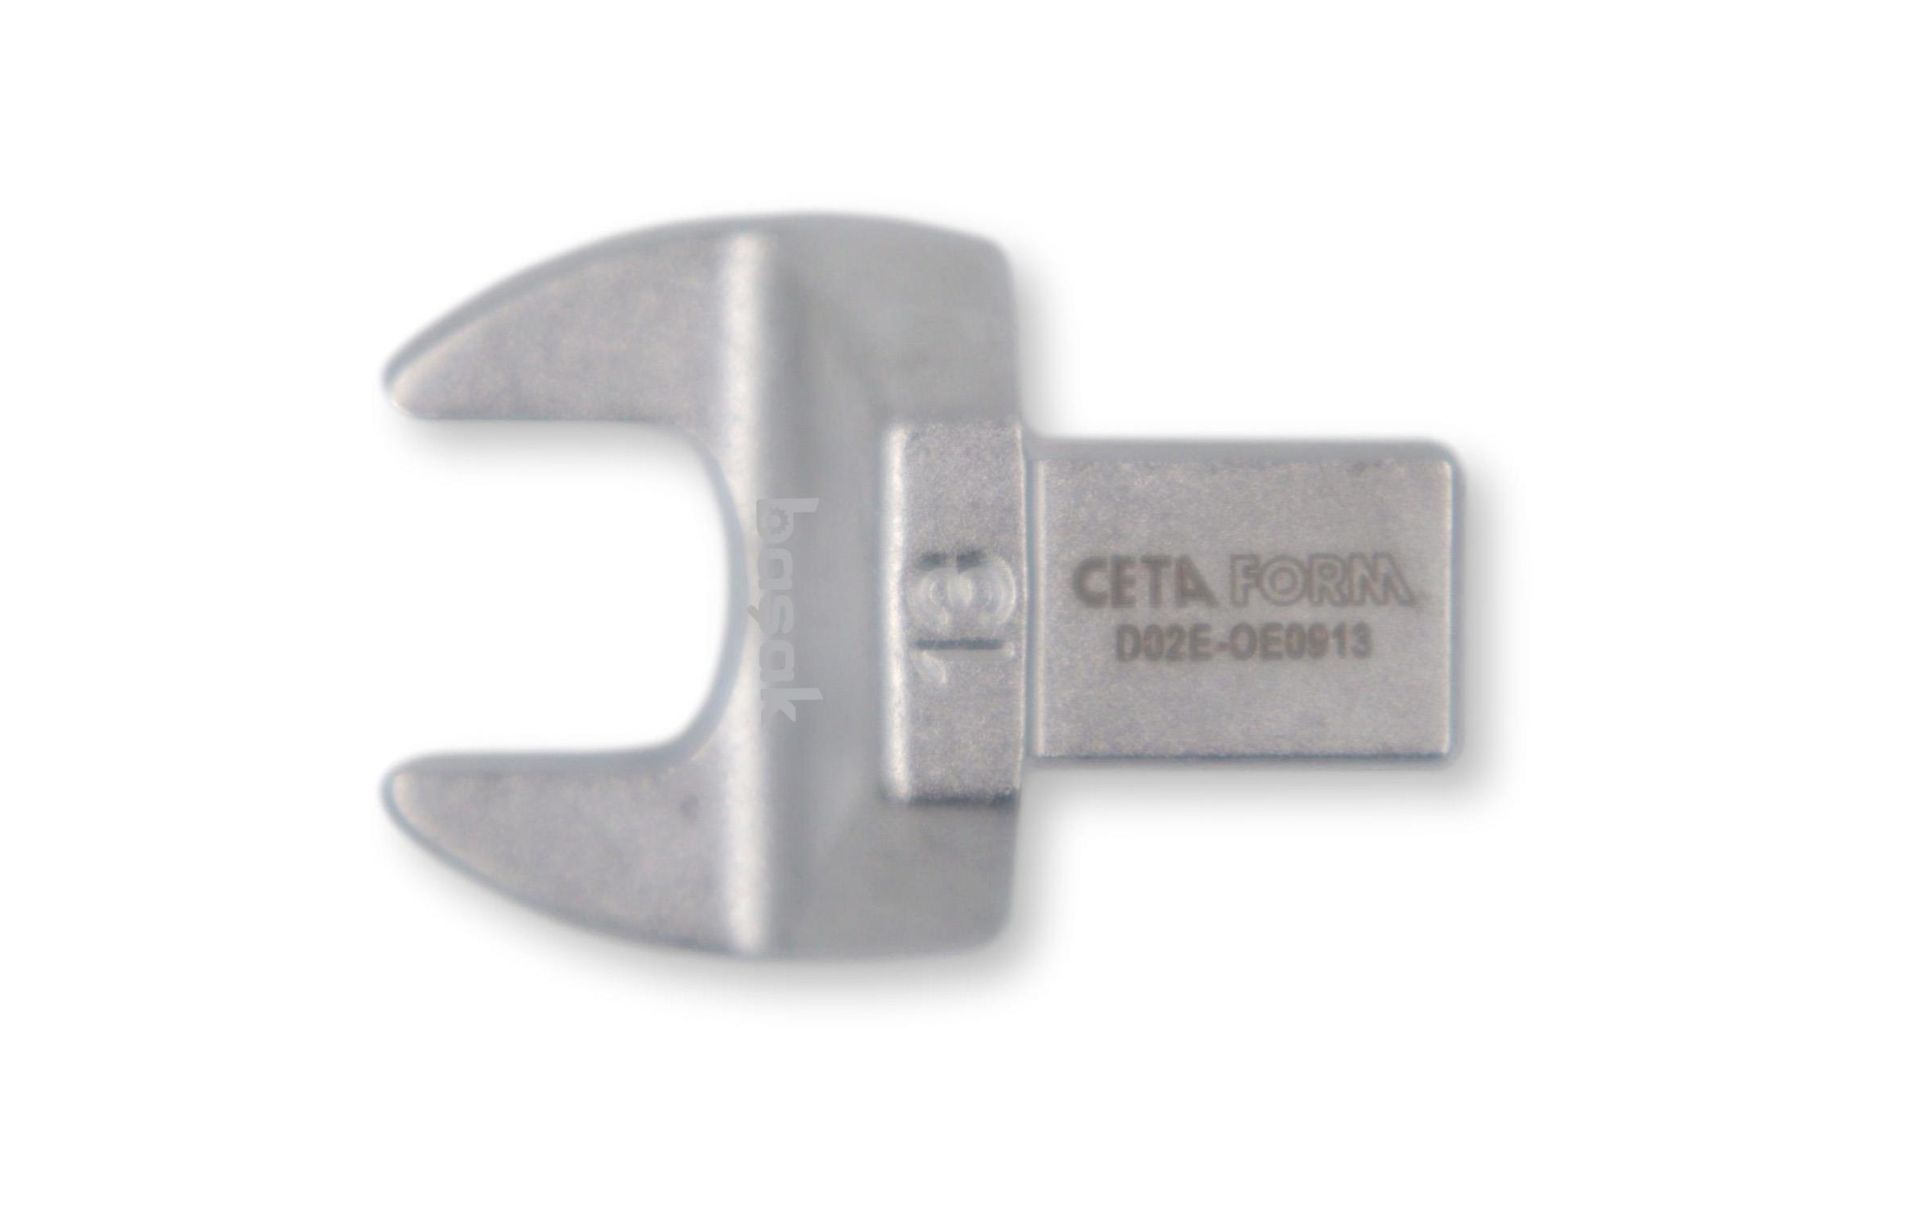 Ceta Form 13mm Açık Ağız Tork Anahtar Ucu (9x12mm) D02E-OE0913